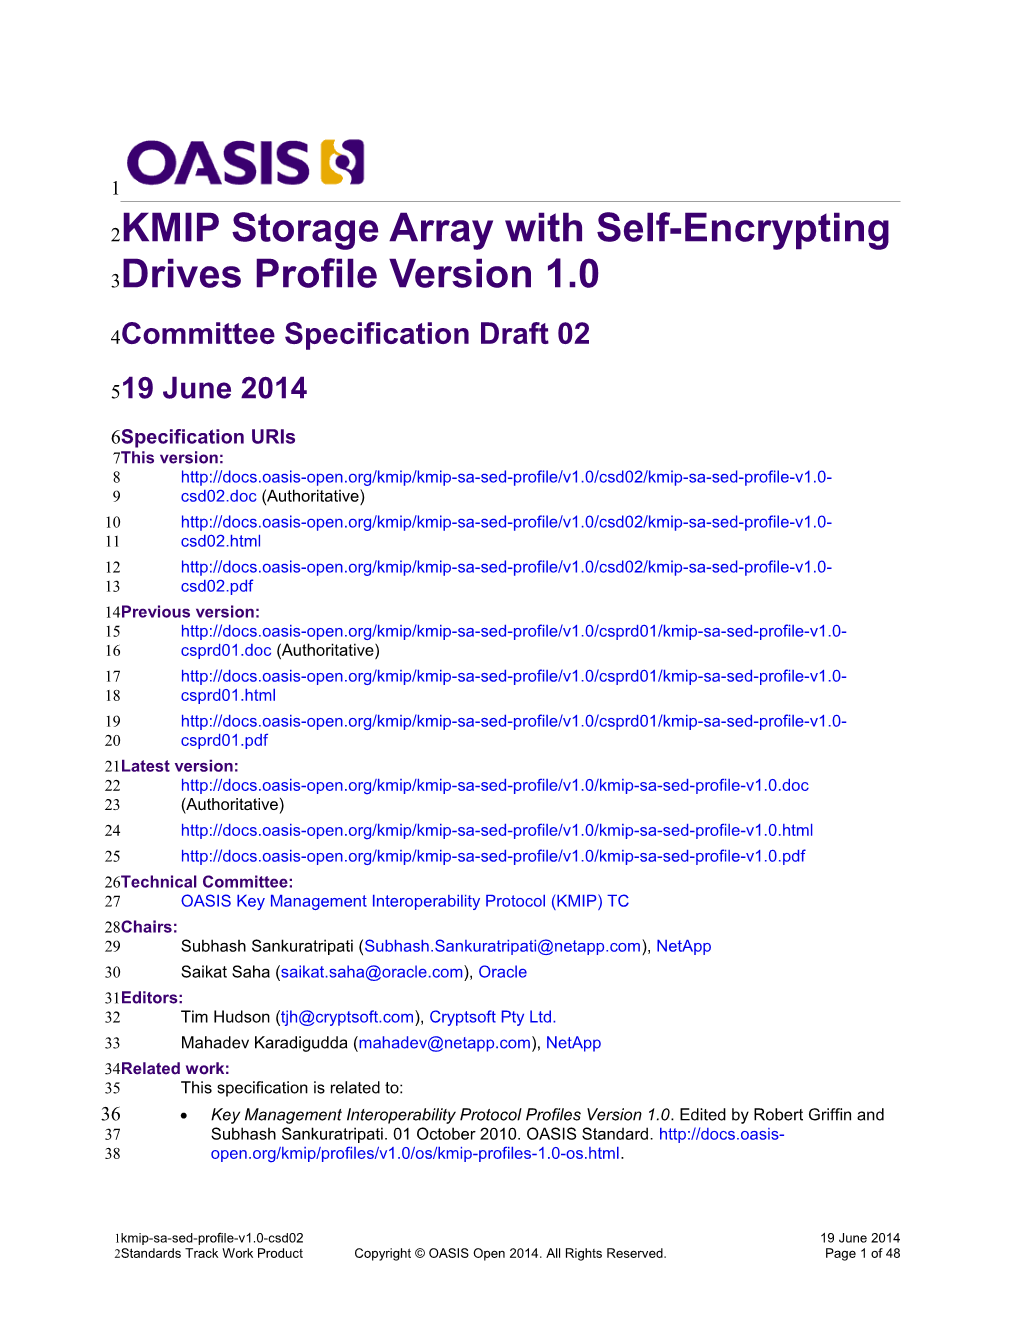 KMIP Storage Array with Self-Encrypting Drives Profile Version 1.0